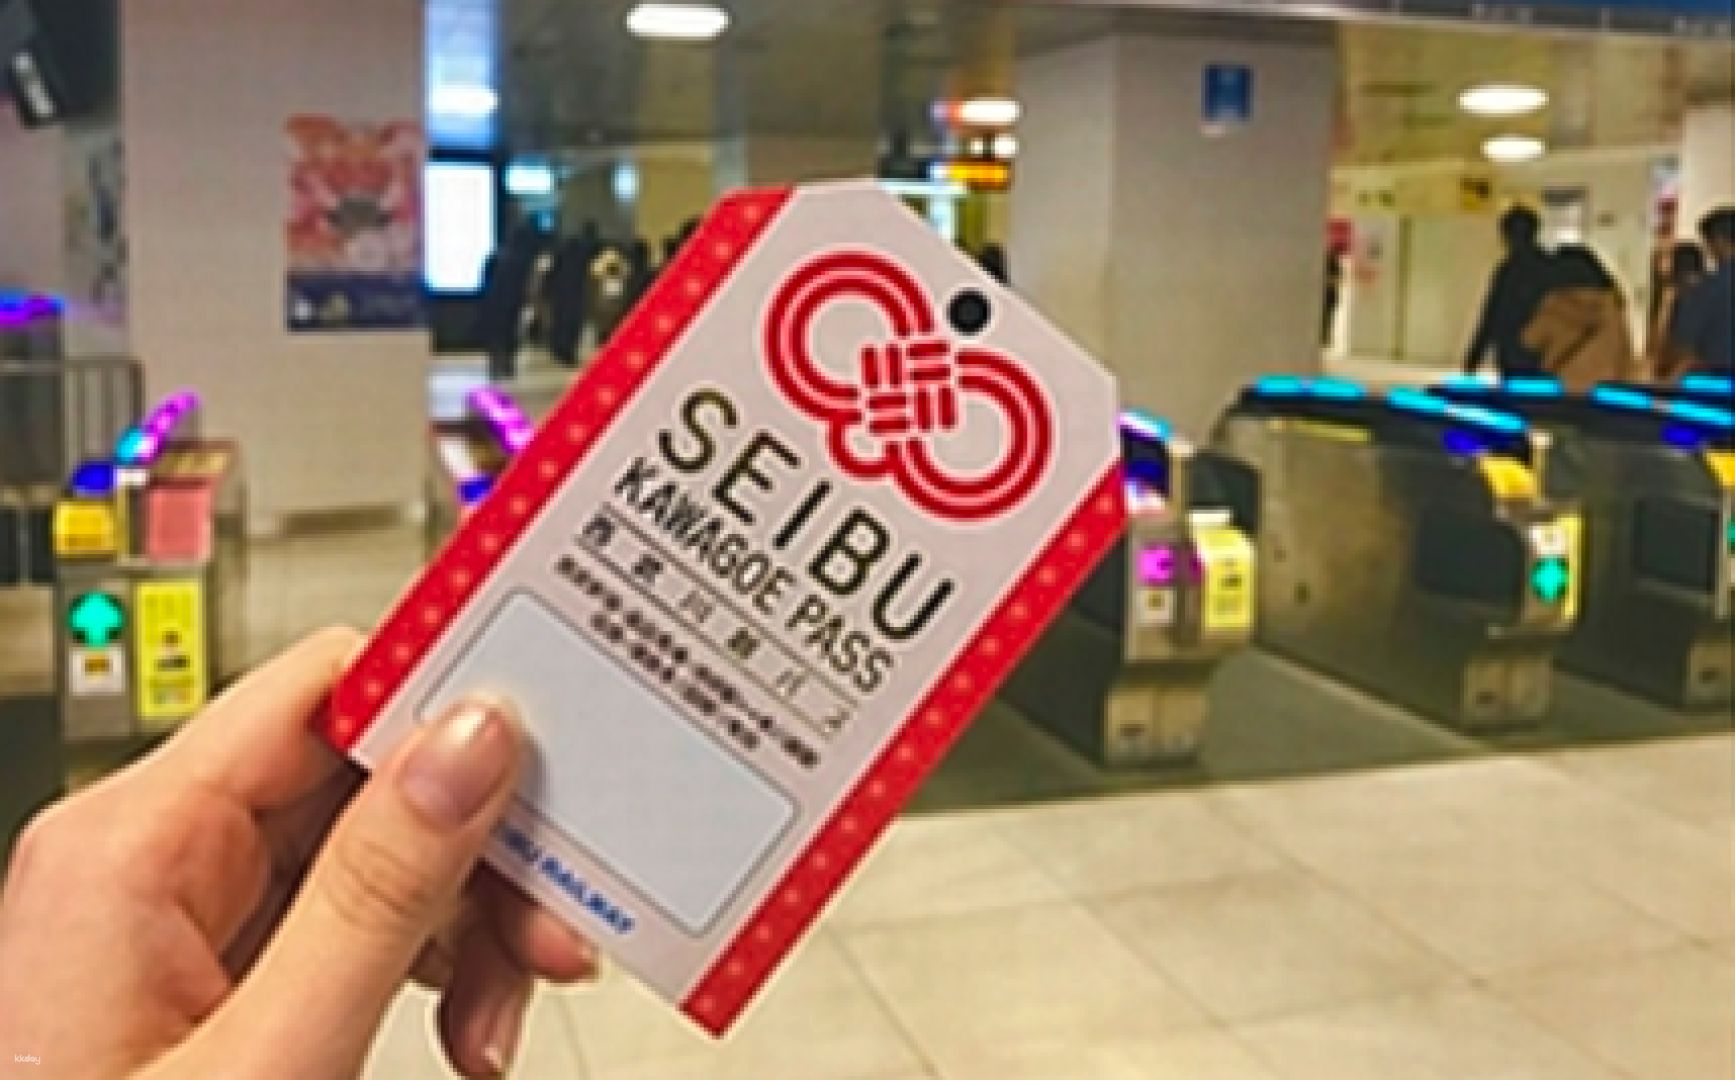 SEIBU Tourist Information Center